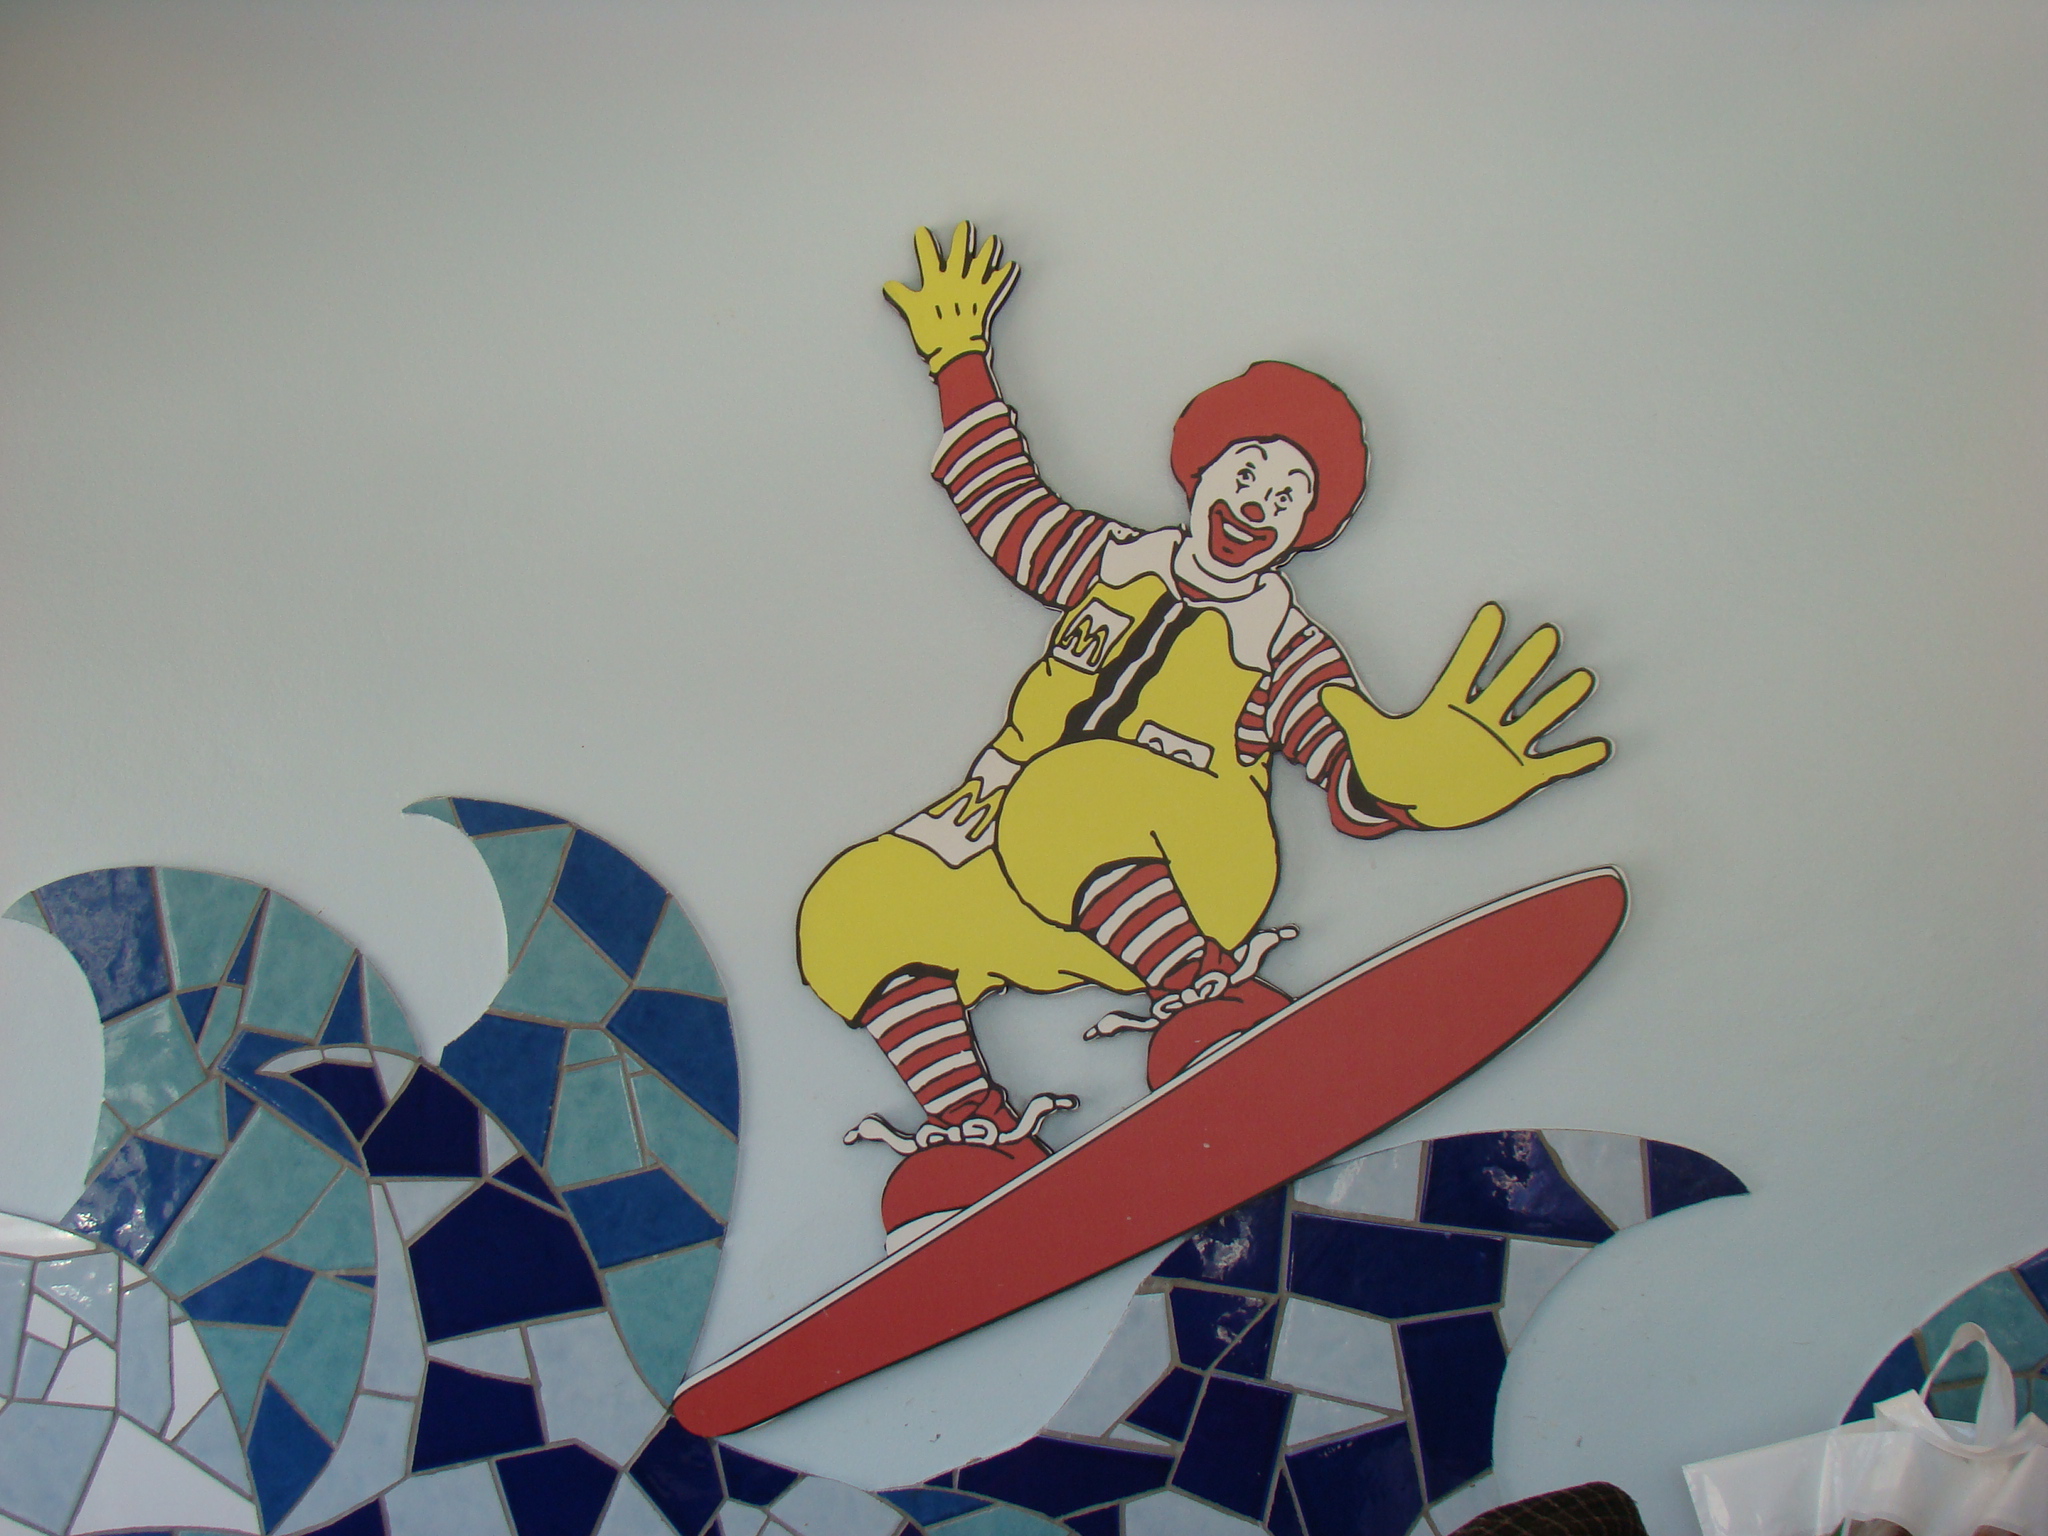 a man riding a skateboard while wearing a clown costume